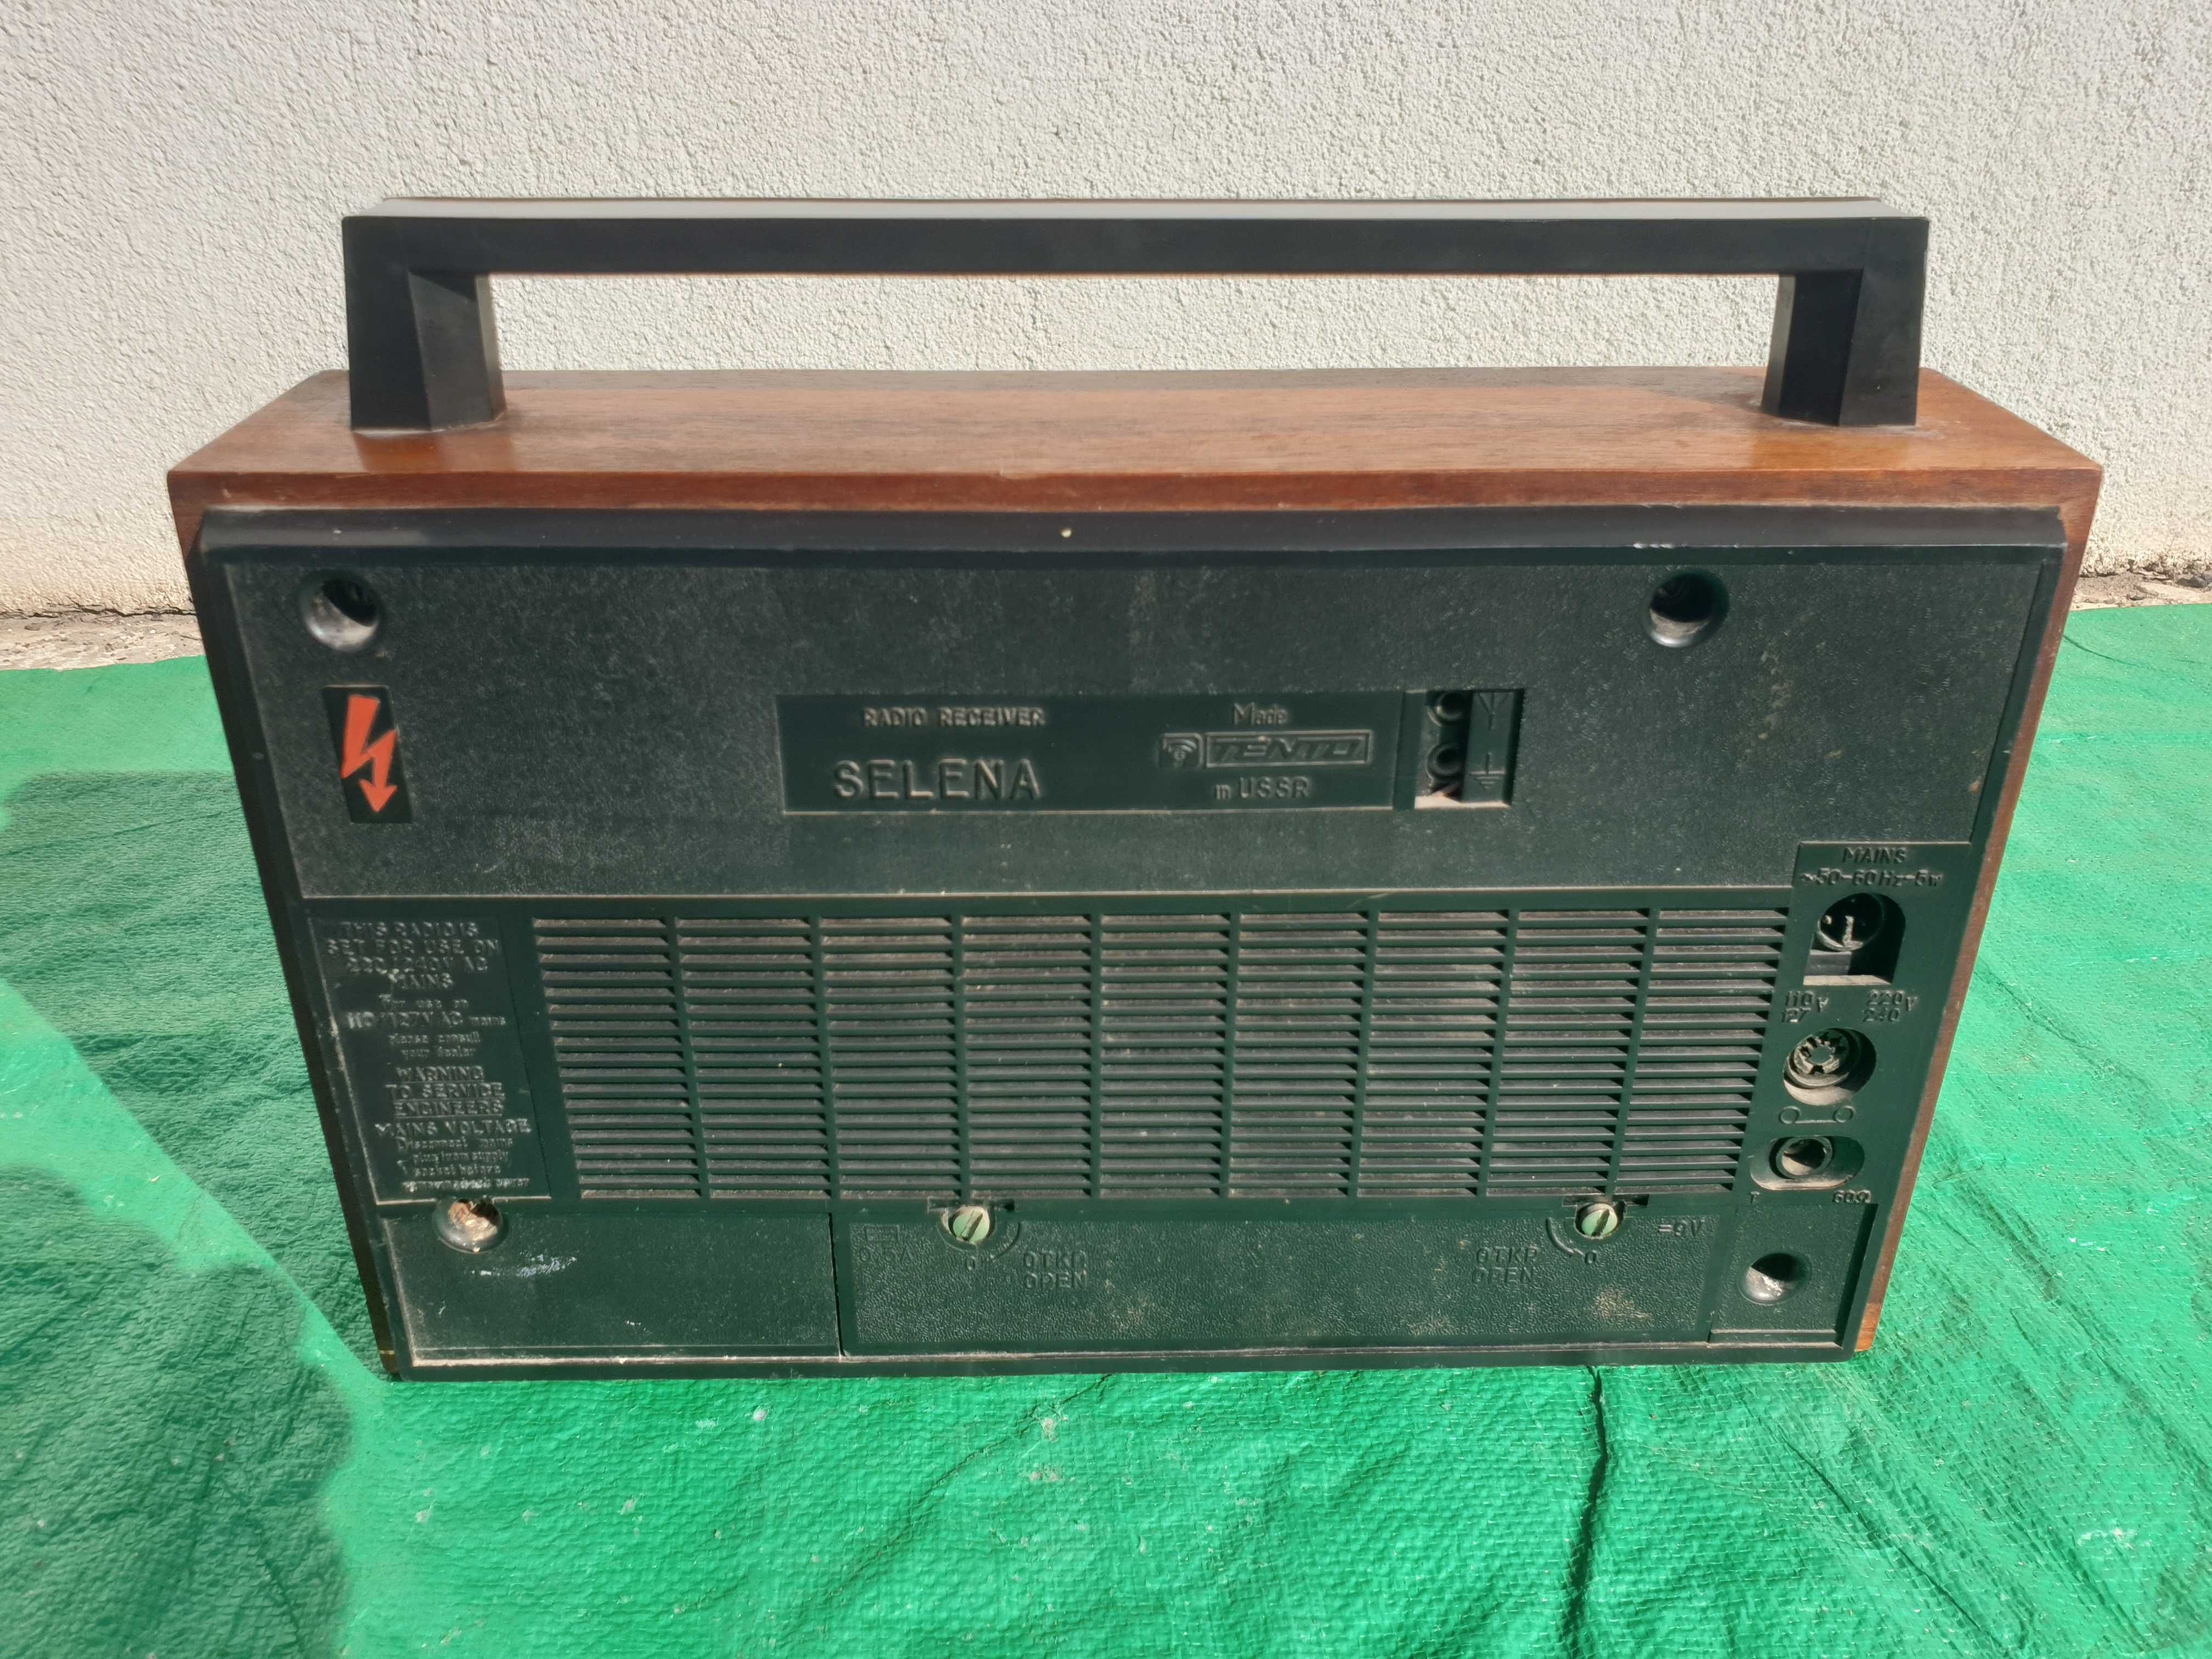 Radio receptor Selena,model B-209,fabricant
Uniunea Sovietică
An 1979